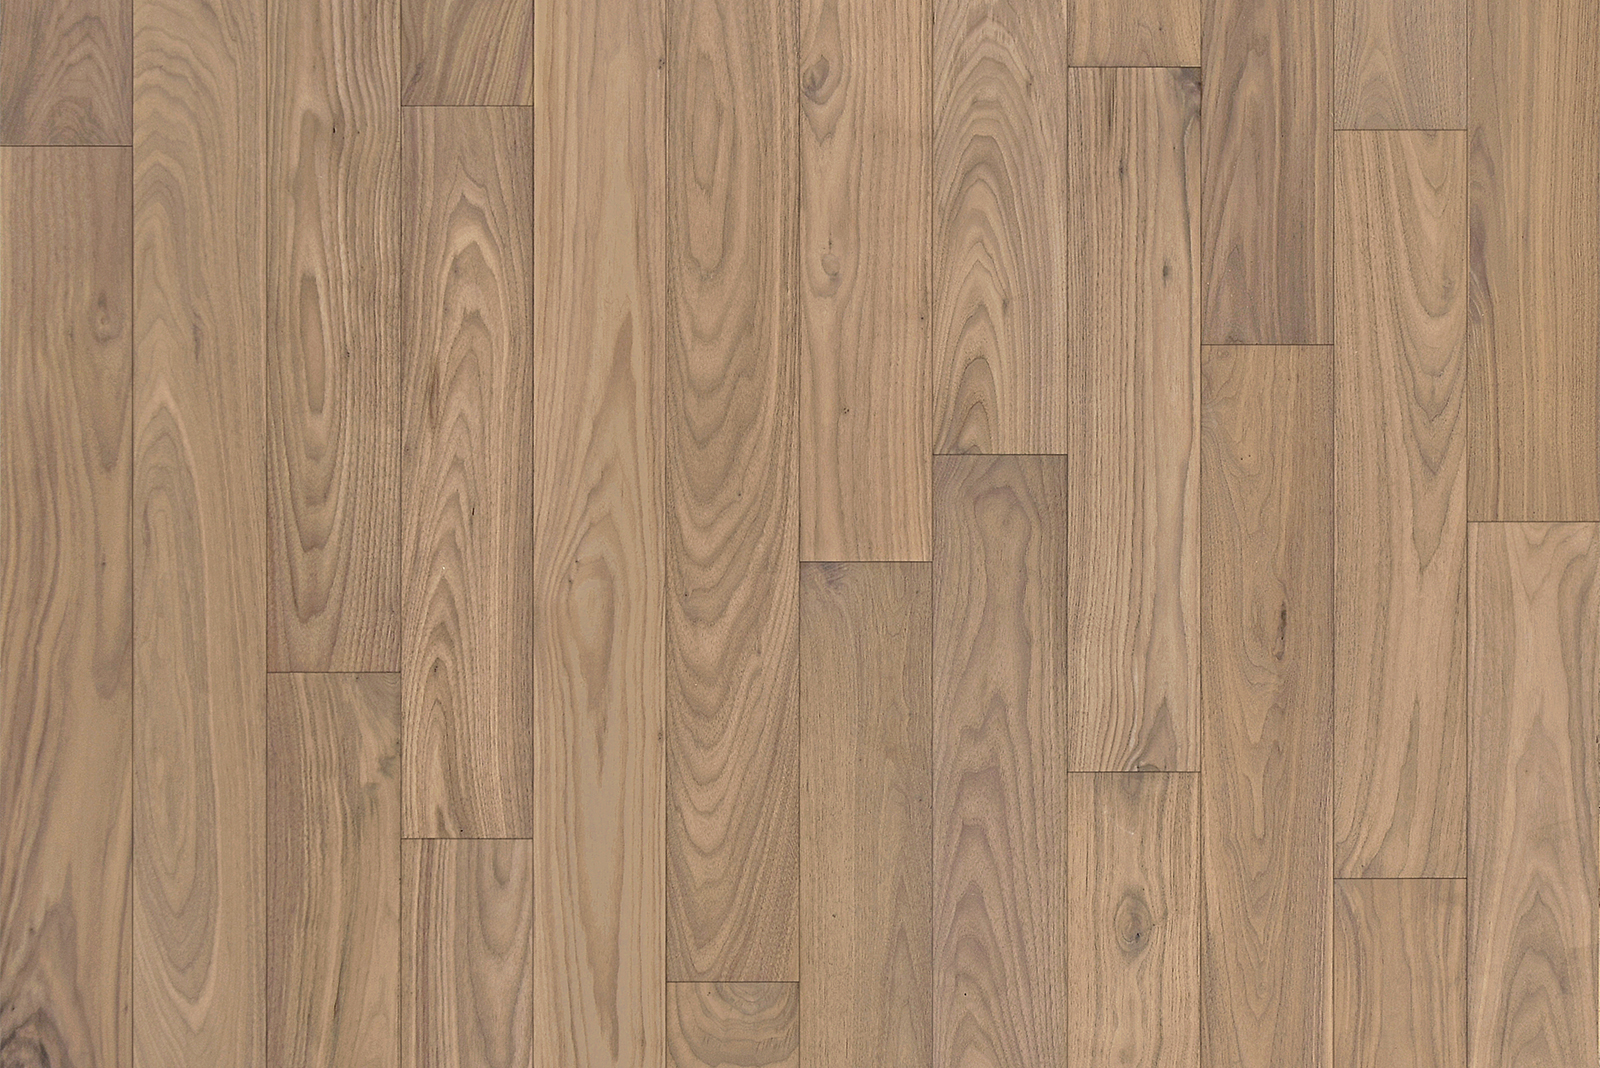 walnut hardwood flooring texture